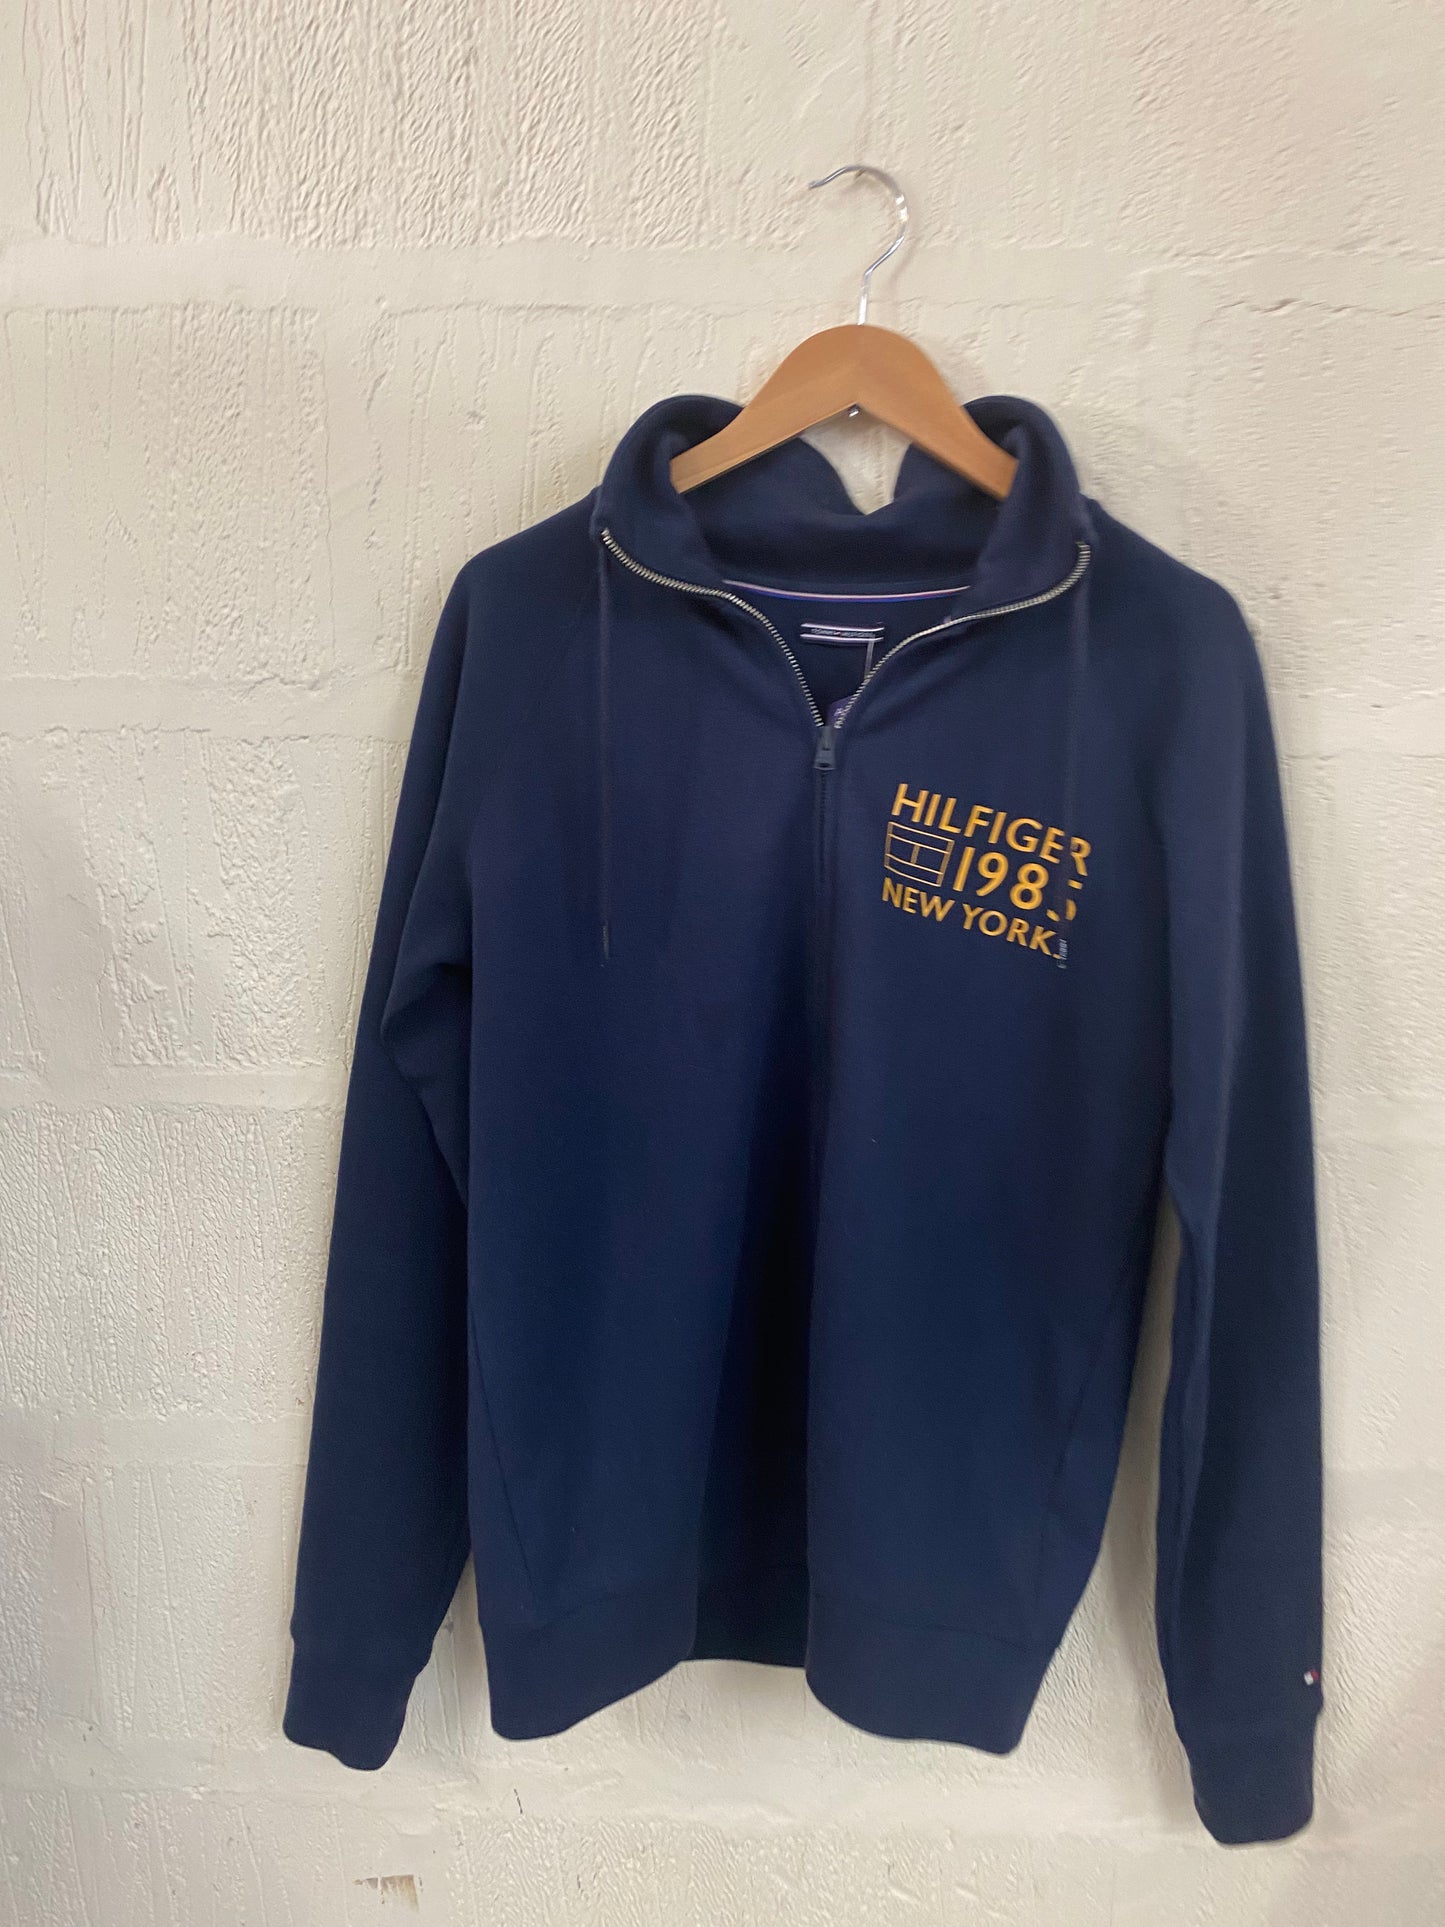 Tommy Hilfiger Navy Zip Sweatshirt  1985 New York Size S